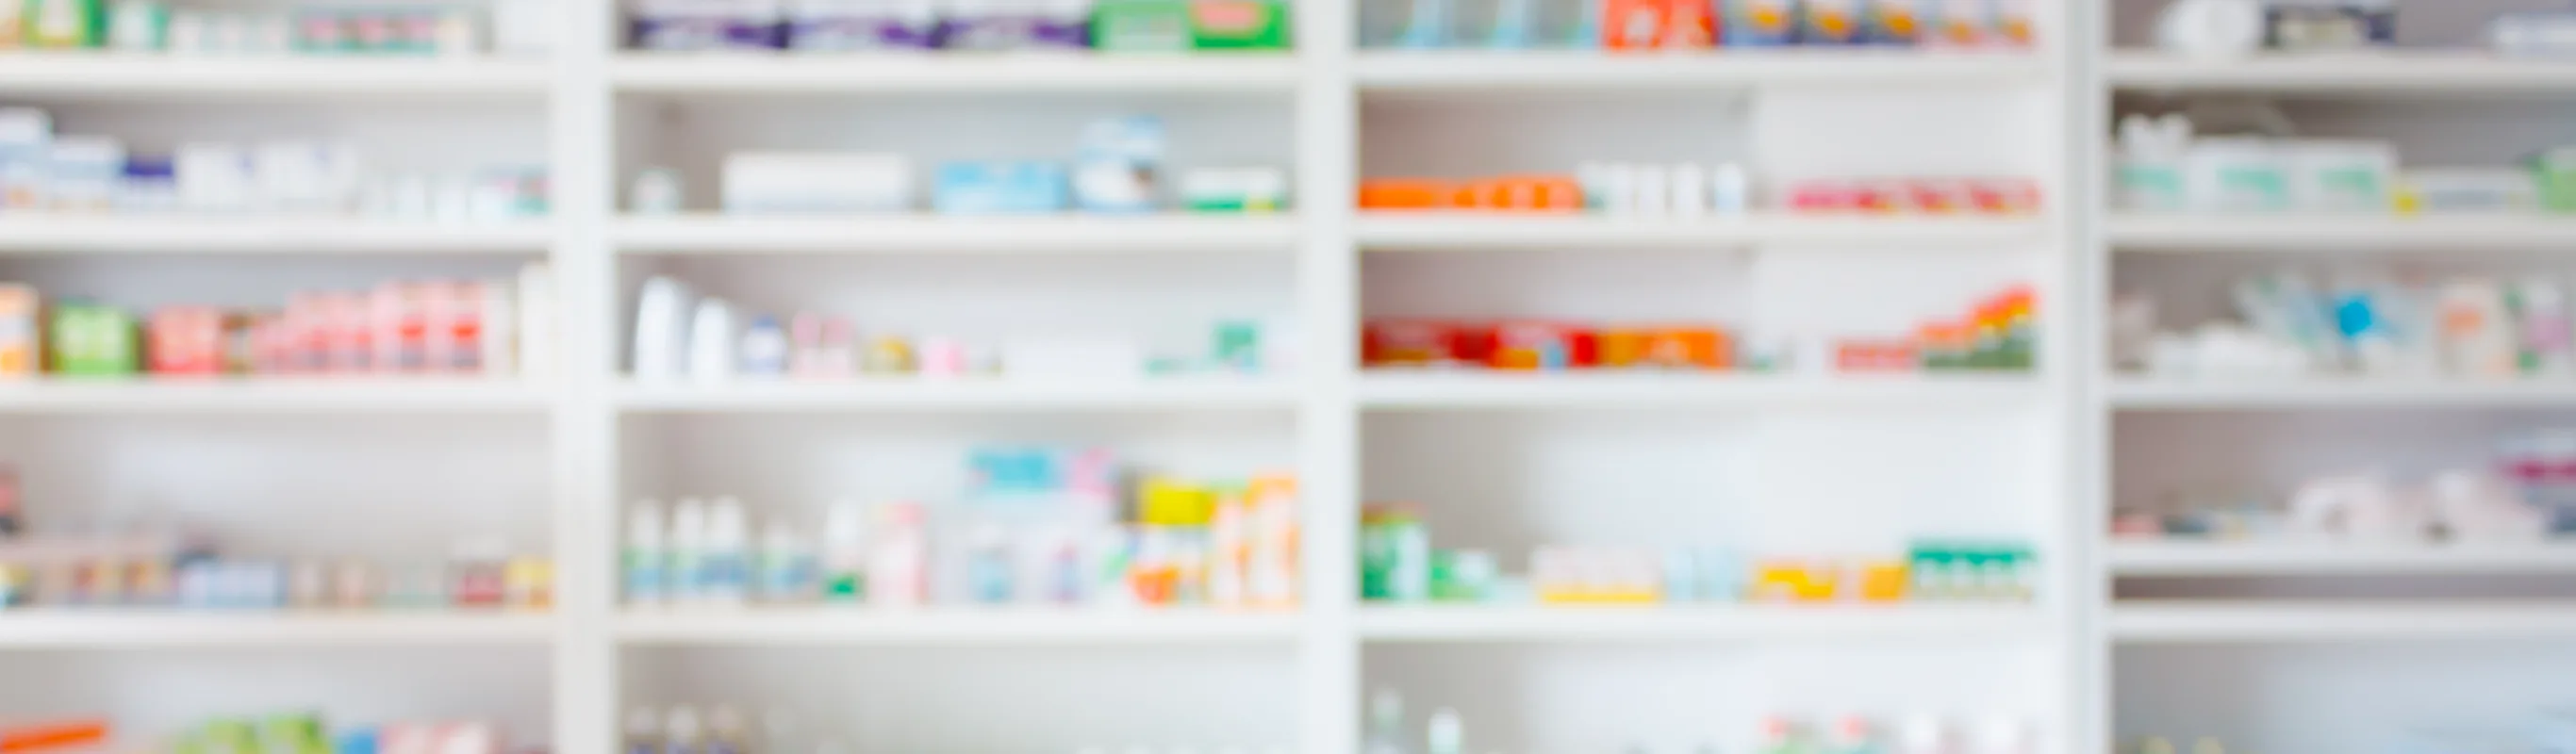 Prescriptions shelves at a pharmacy 